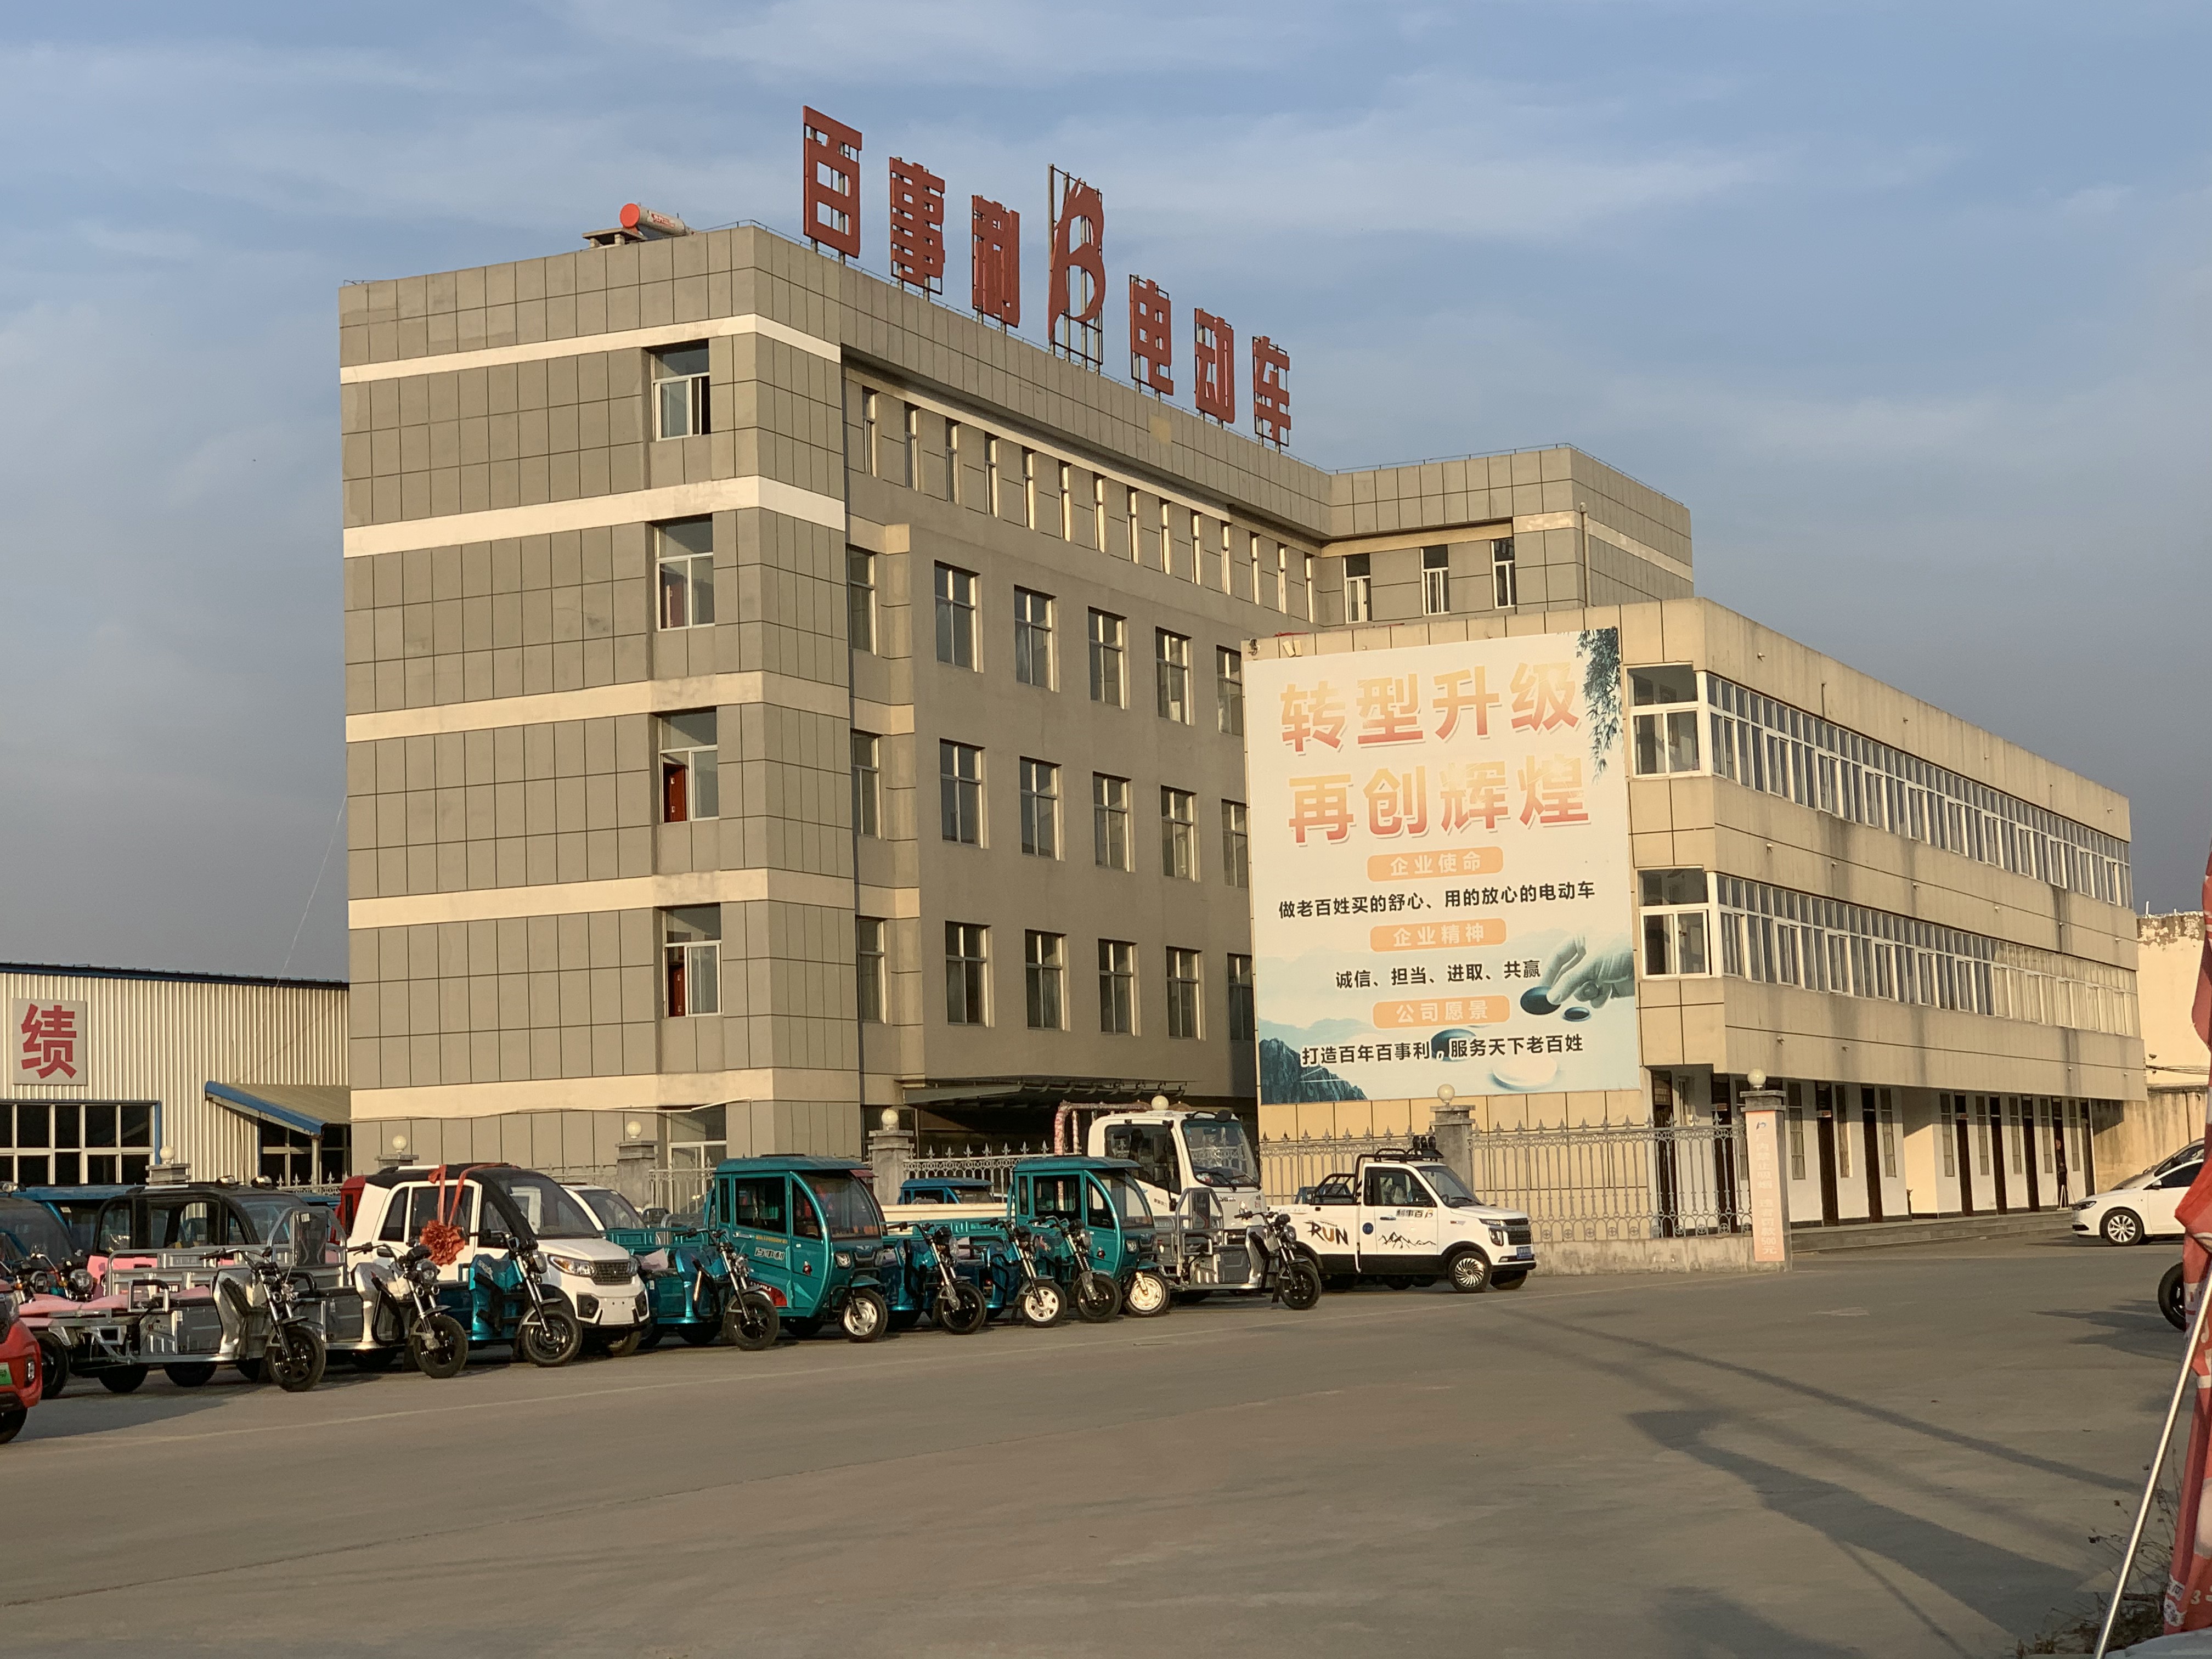 Teren fabryki Furinkaevcar w Chinach